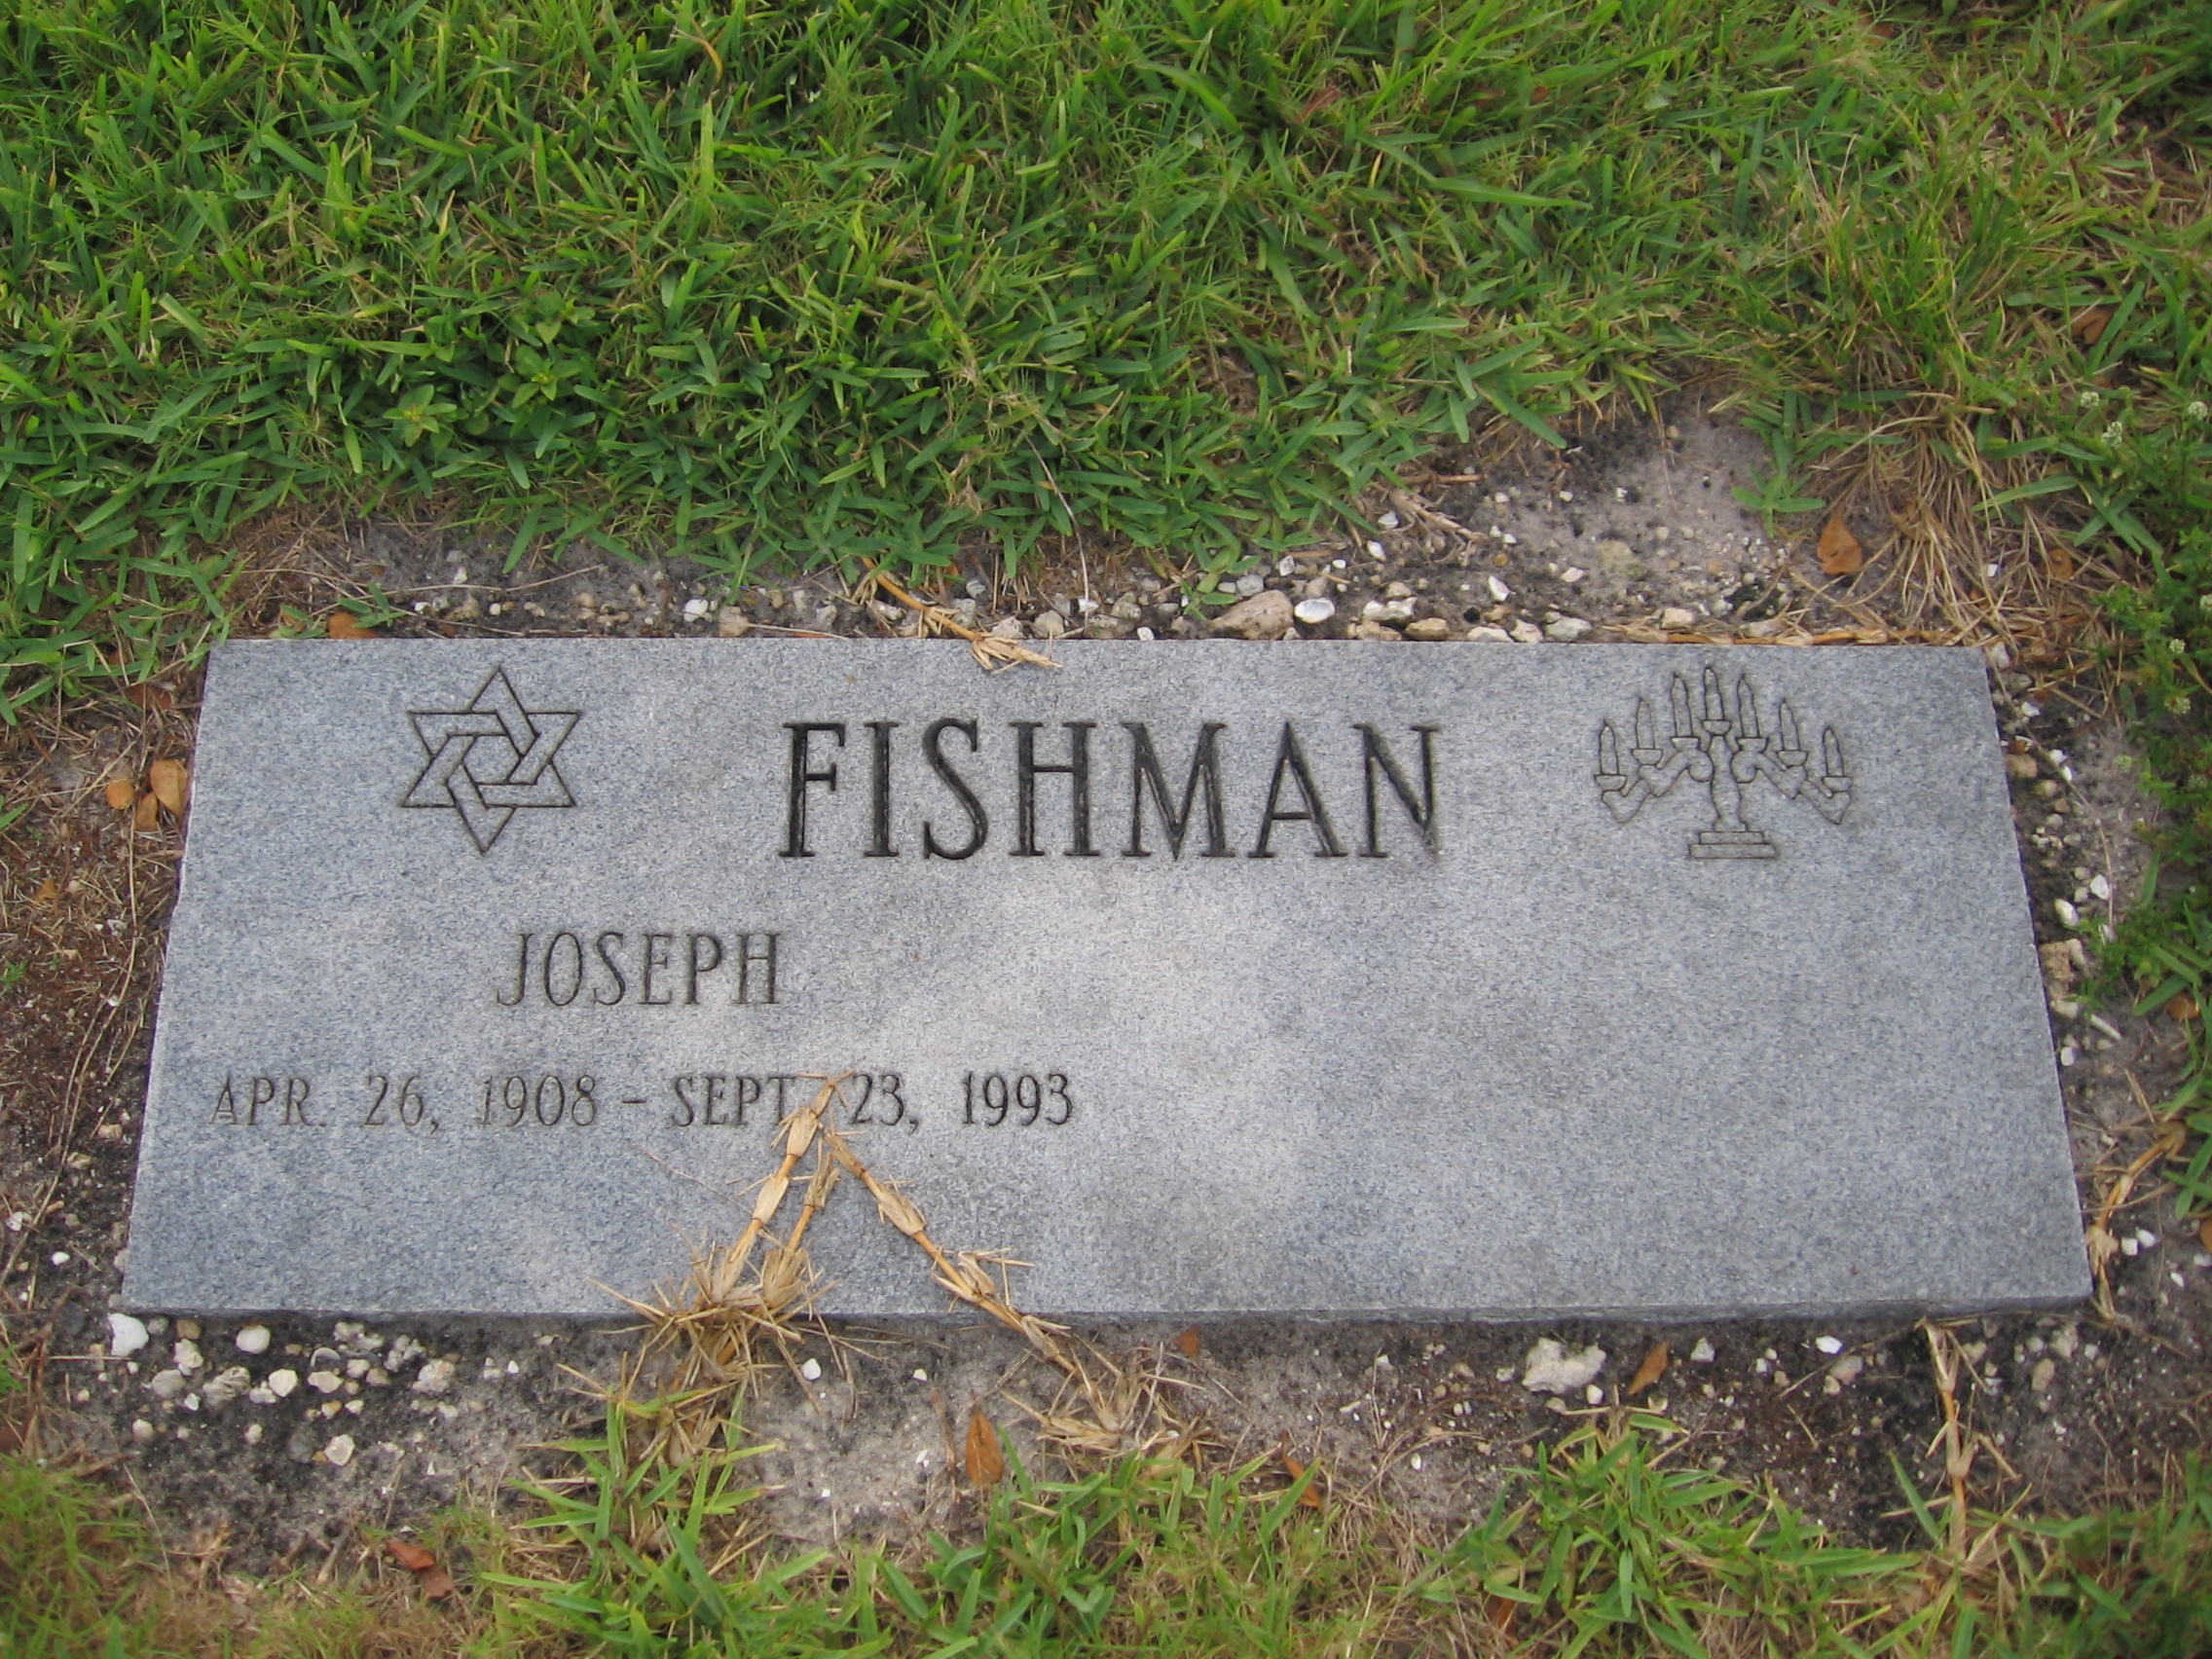 Joseph Fishman